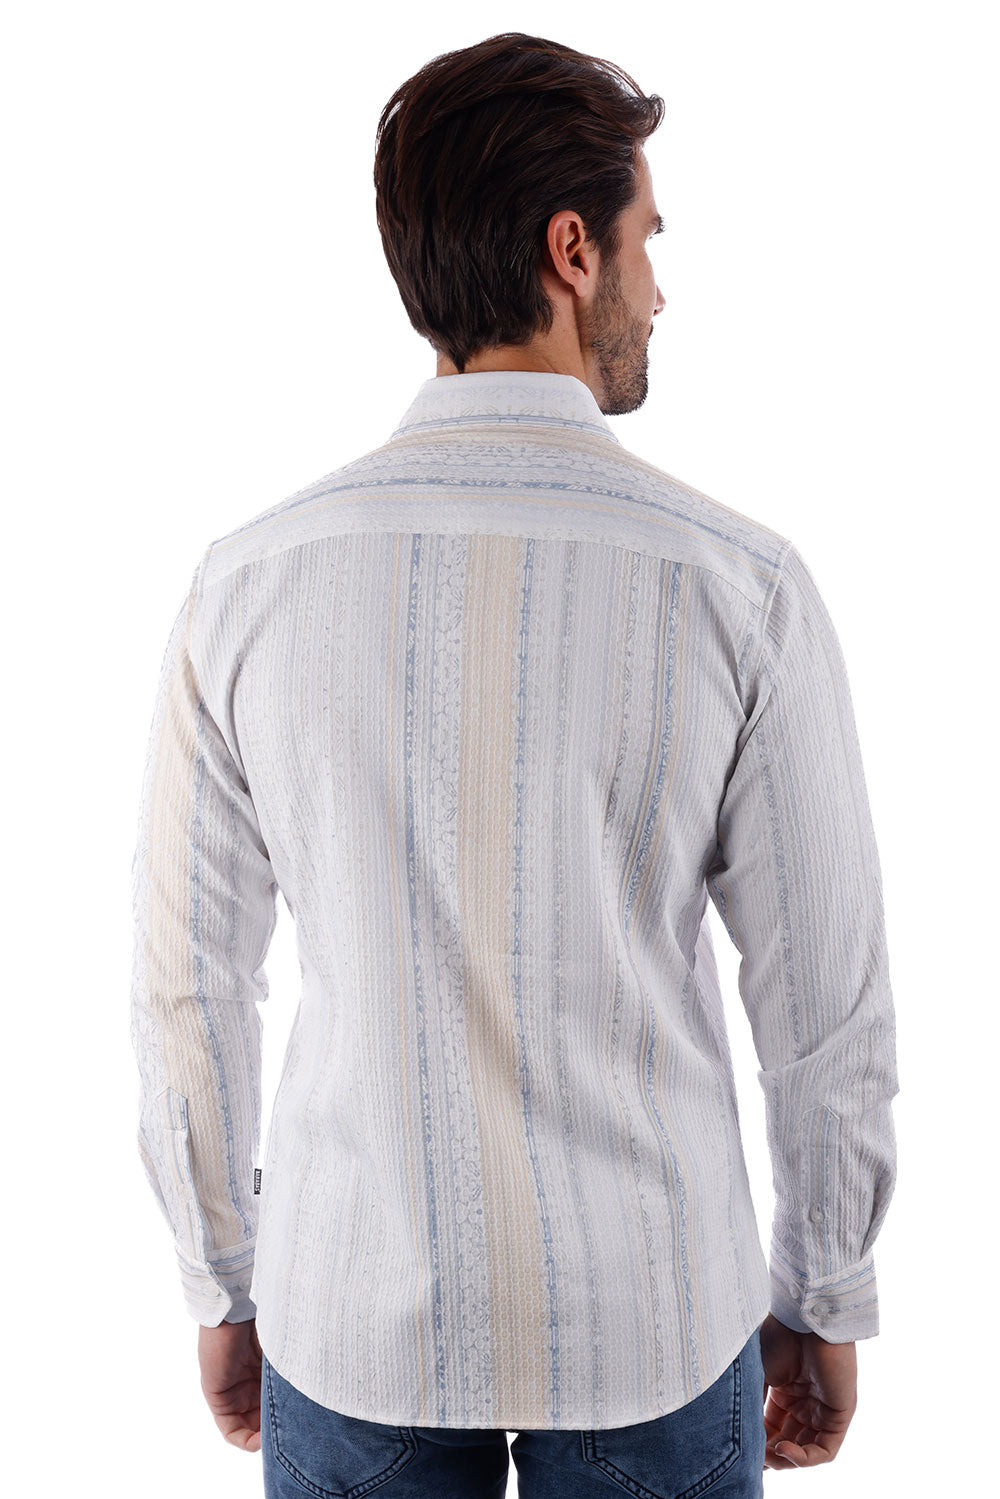 BARABAS Men's Geometric Print Button Down Long Sleeve Shirt 4B41 Tan